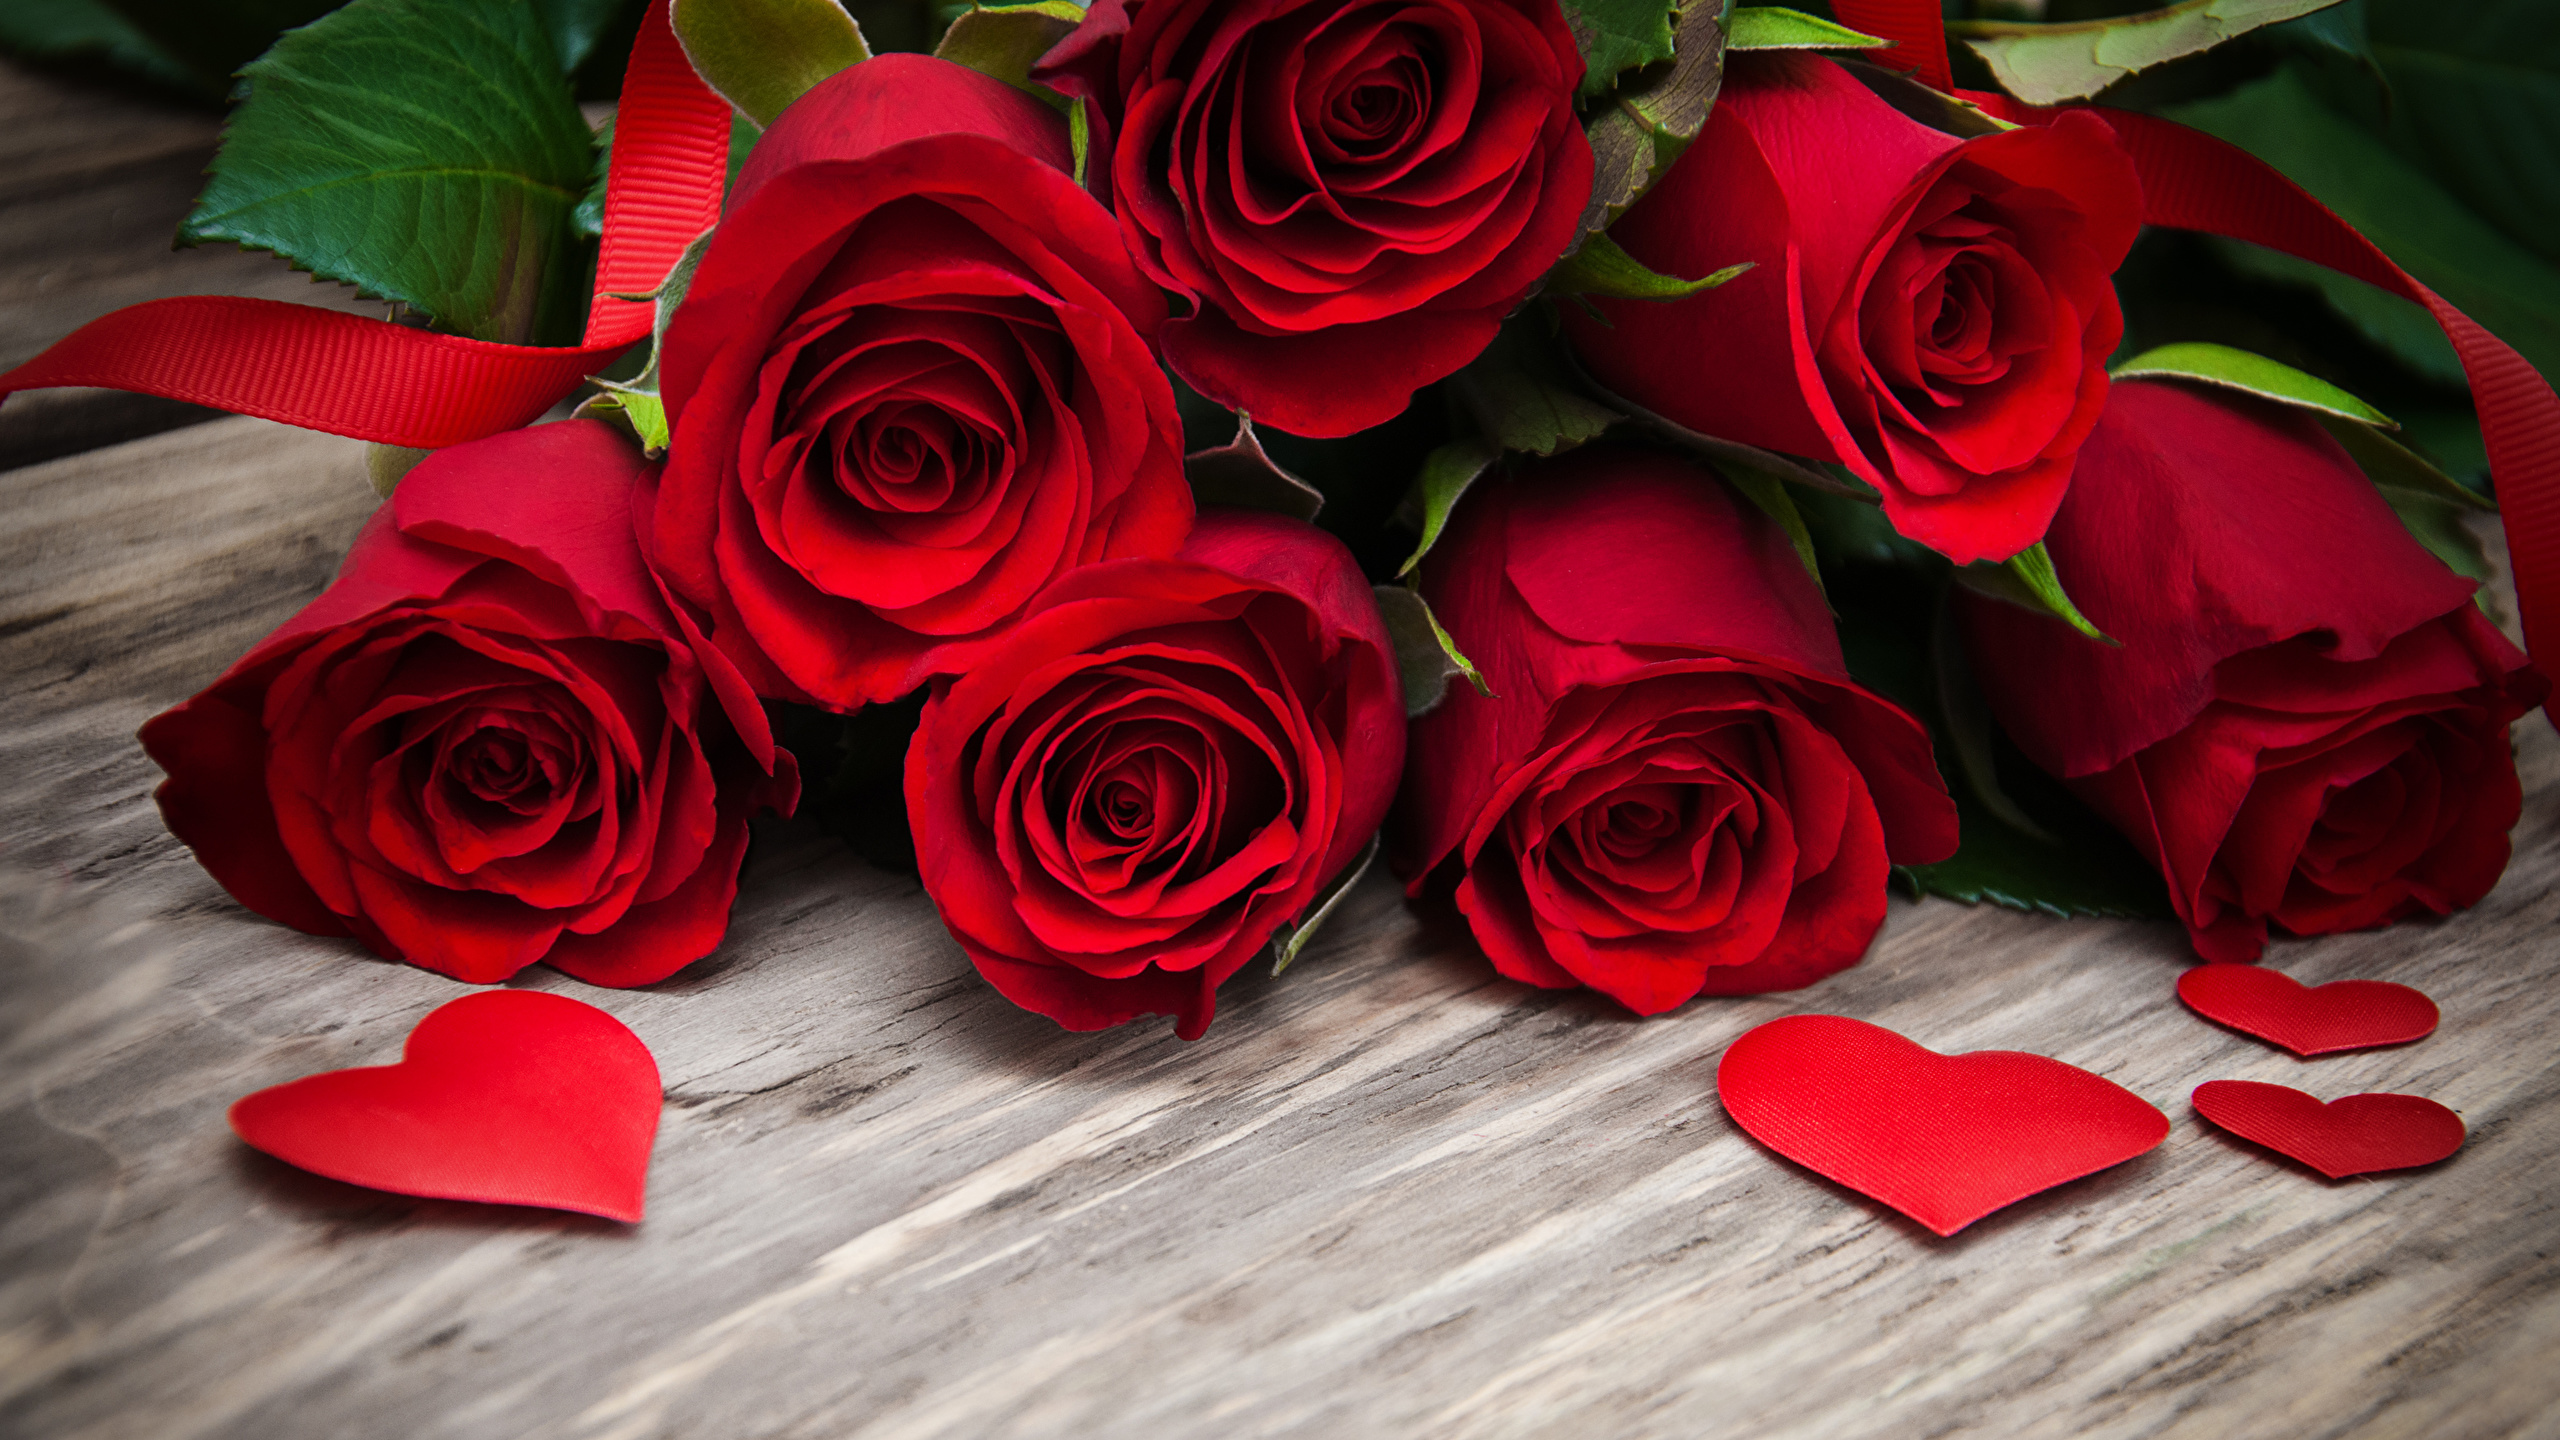 Desktop Wallpapers Heart Red Roses Flowers Wood planks 2560x1440